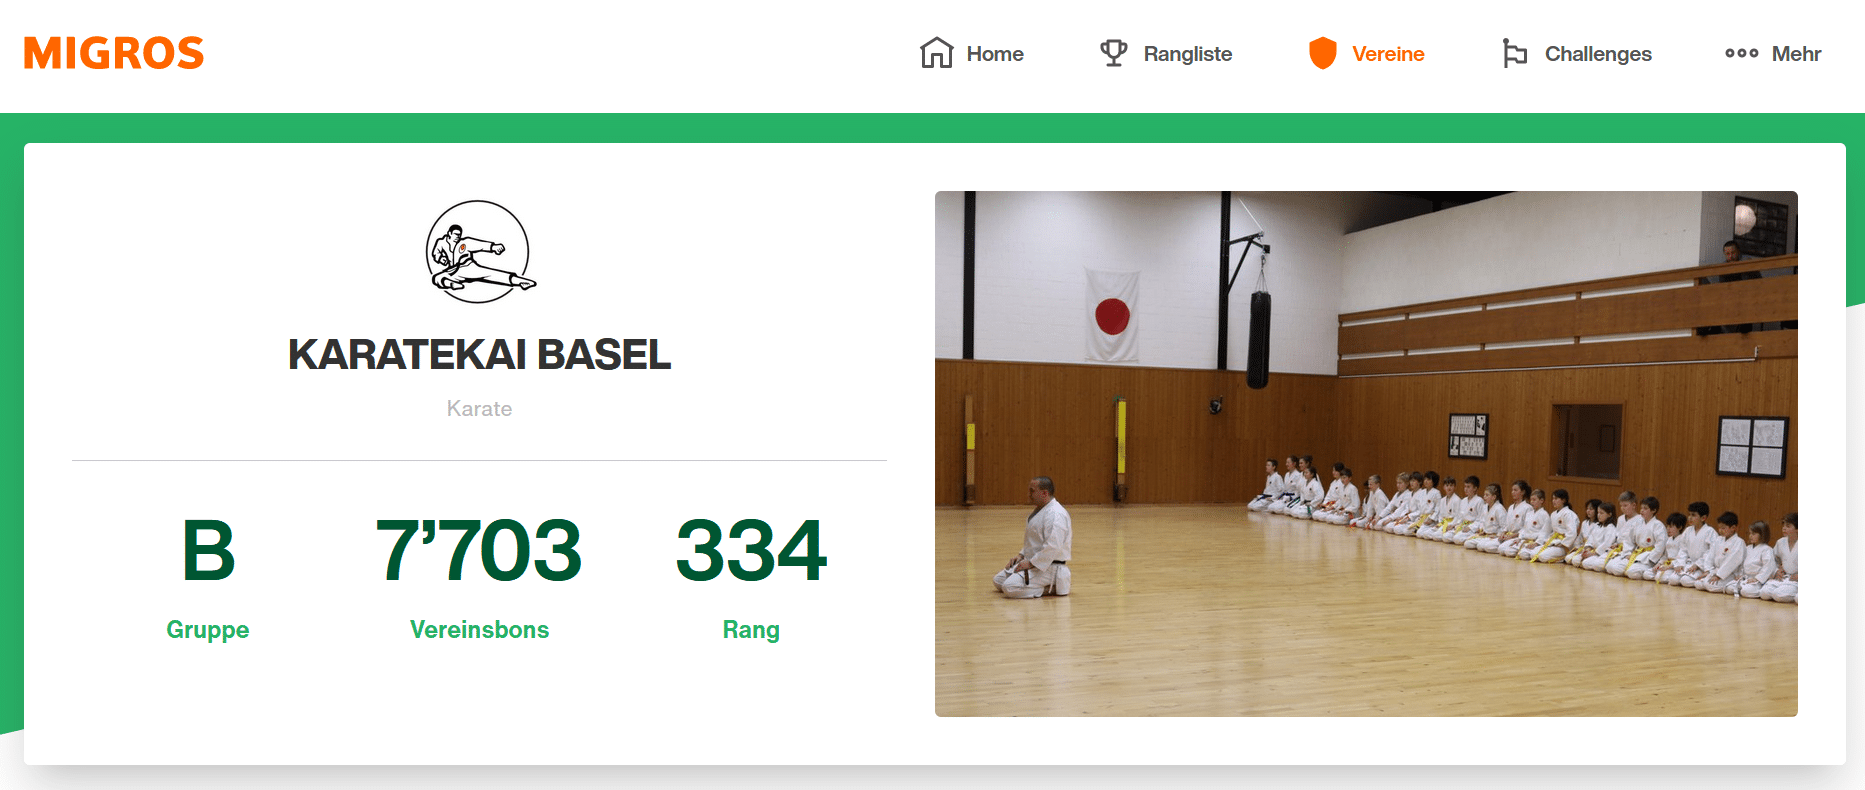 Karatekai Basel - Support Your Sport Rang 334